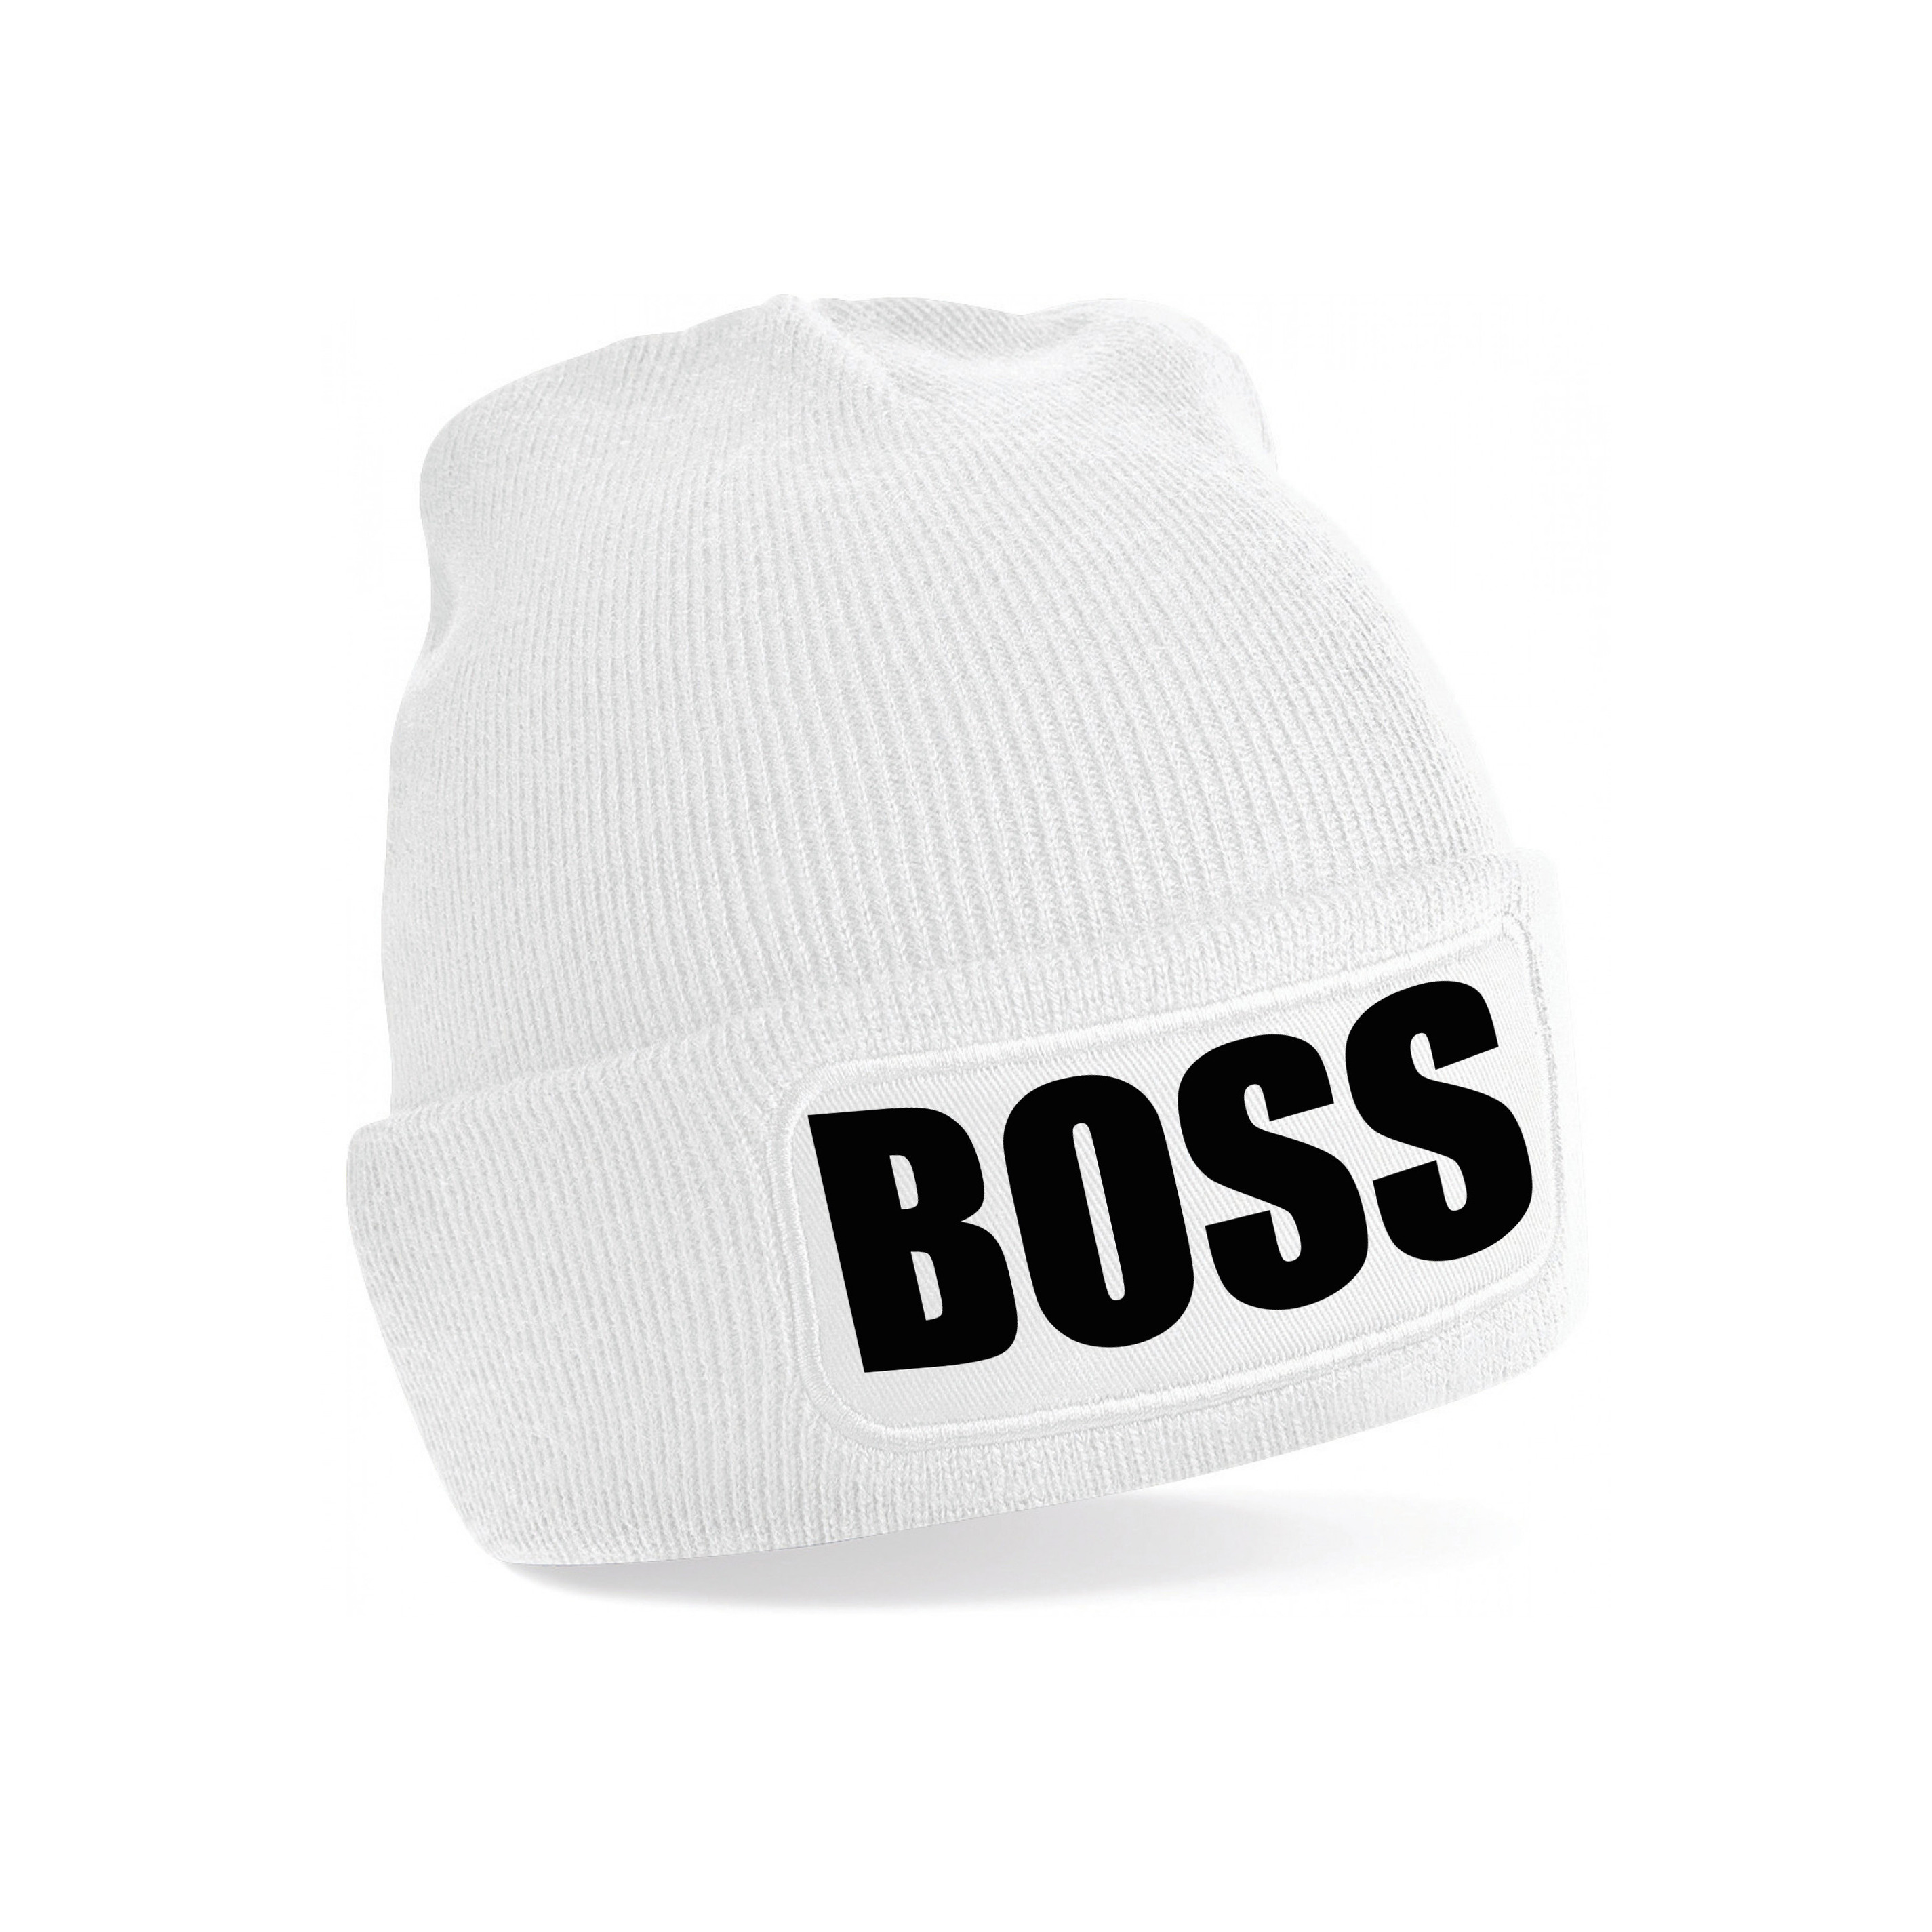 Boss muts-beanie onesize unisex wit